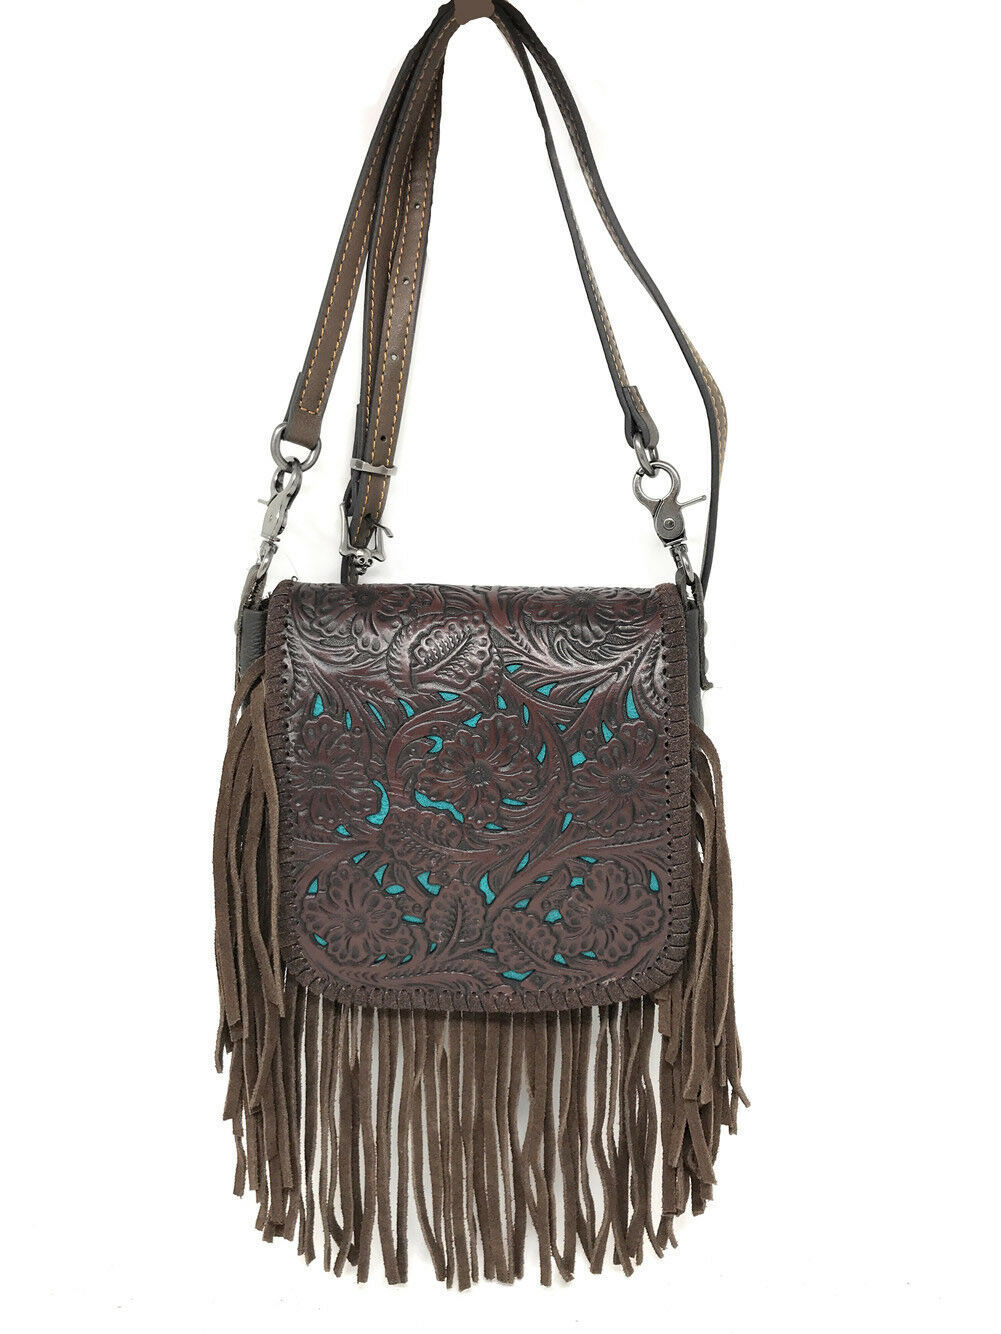 Montana West 100%Genuine Leather Tooled Fringe Crossbody Messenger bag 7 colors - Handbags & Purses